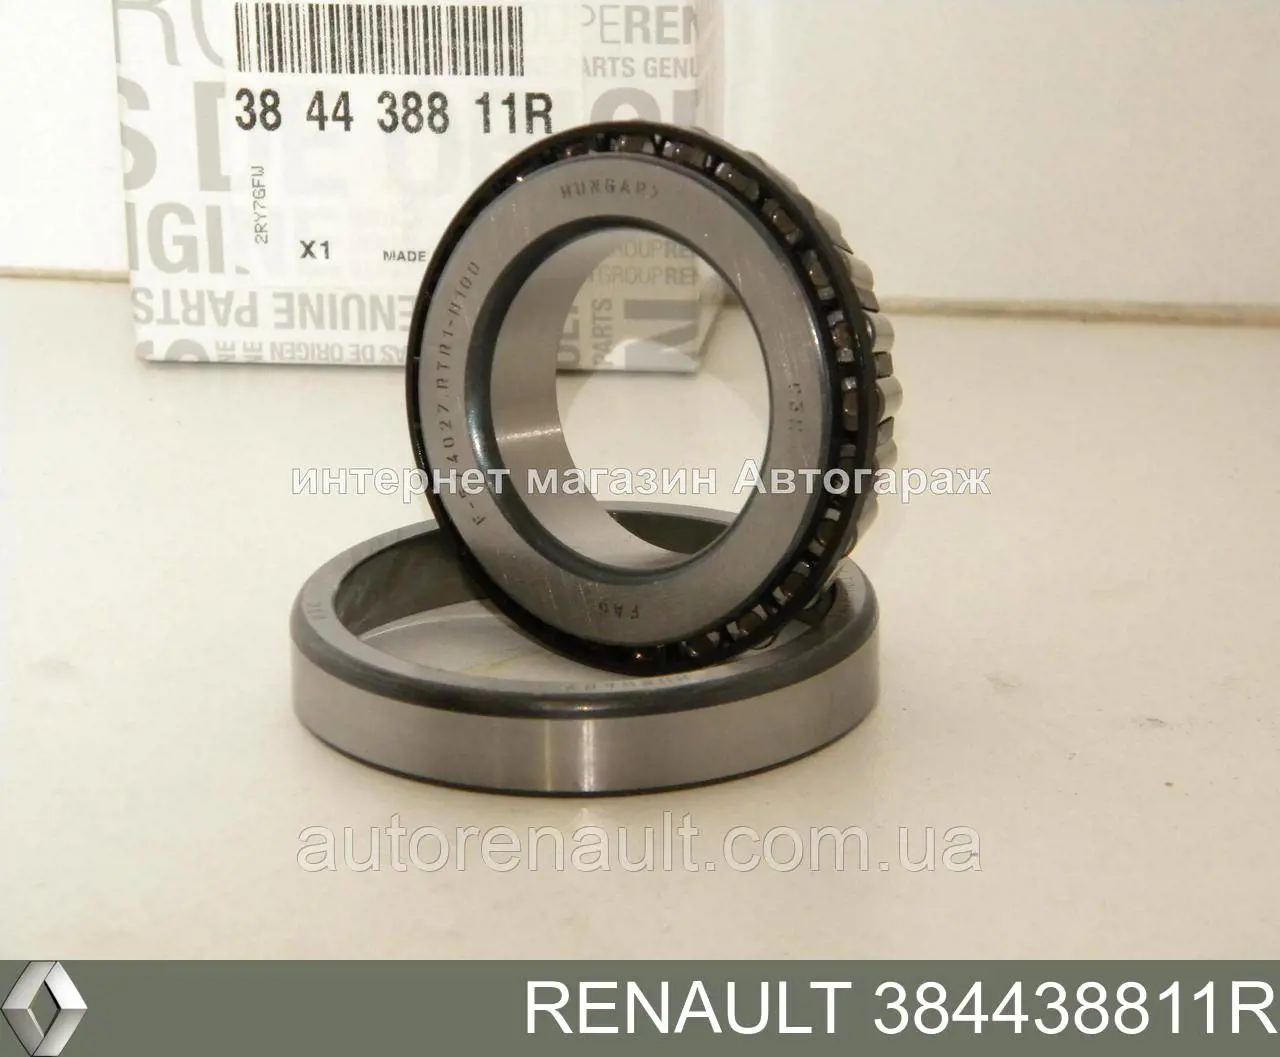 Подшипник КПП Renault (RVI) 384438811R